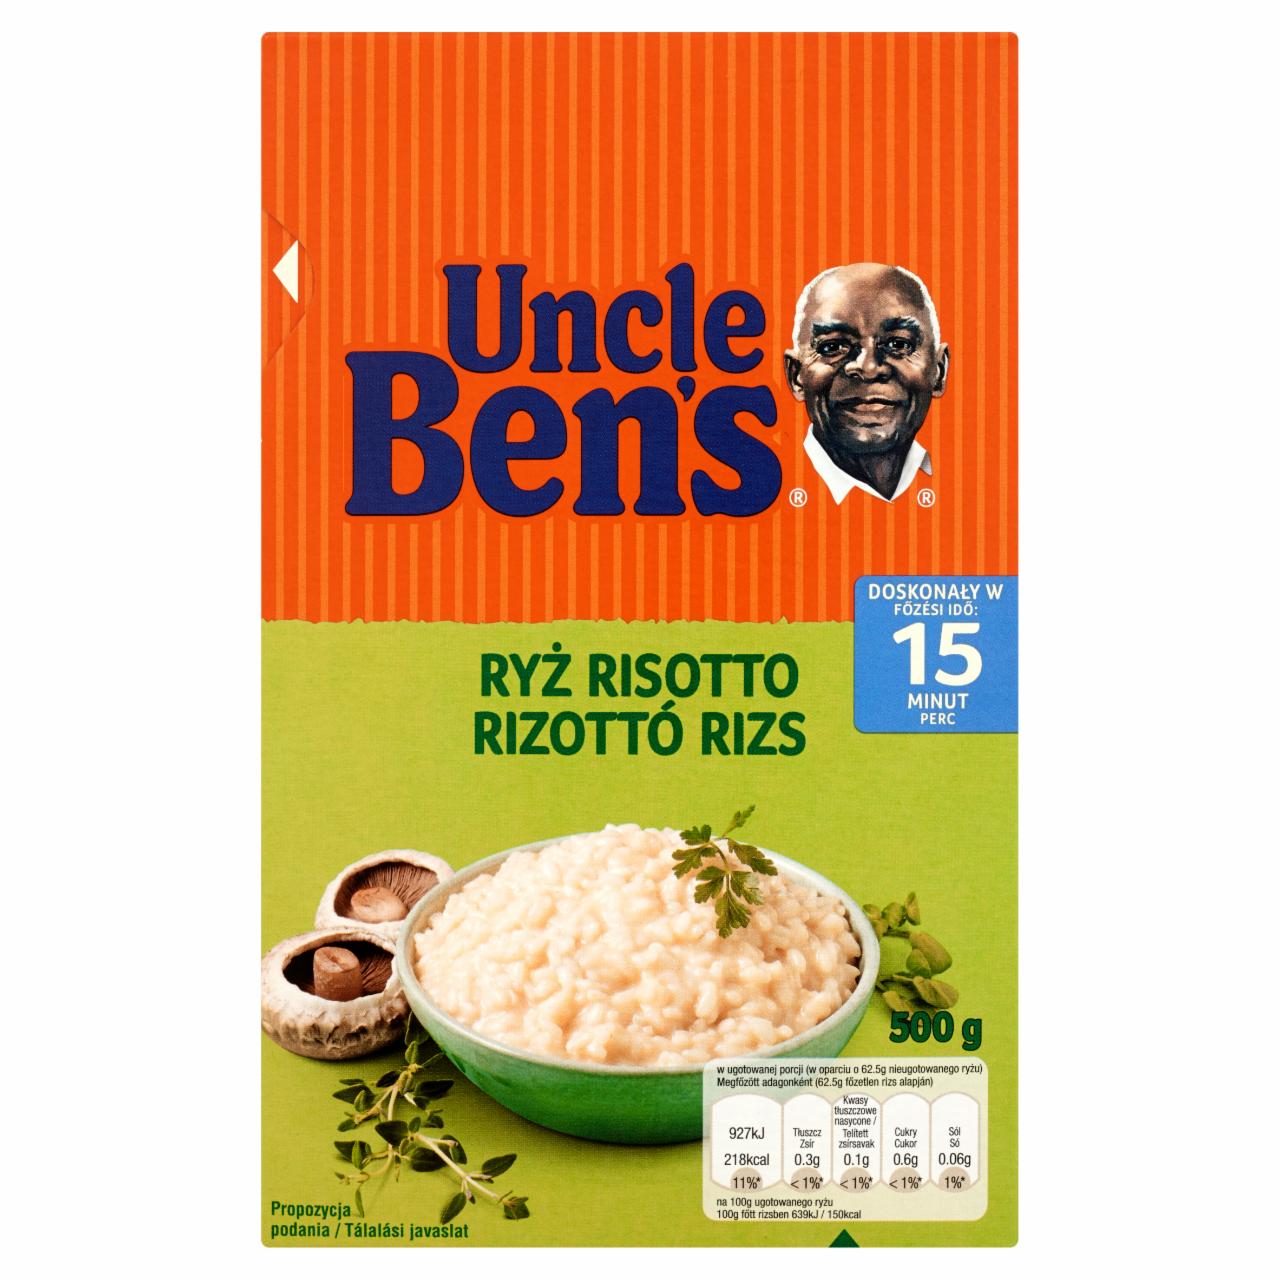 Zdjęcia - Uncle Ben's Ryż risotto 500 g